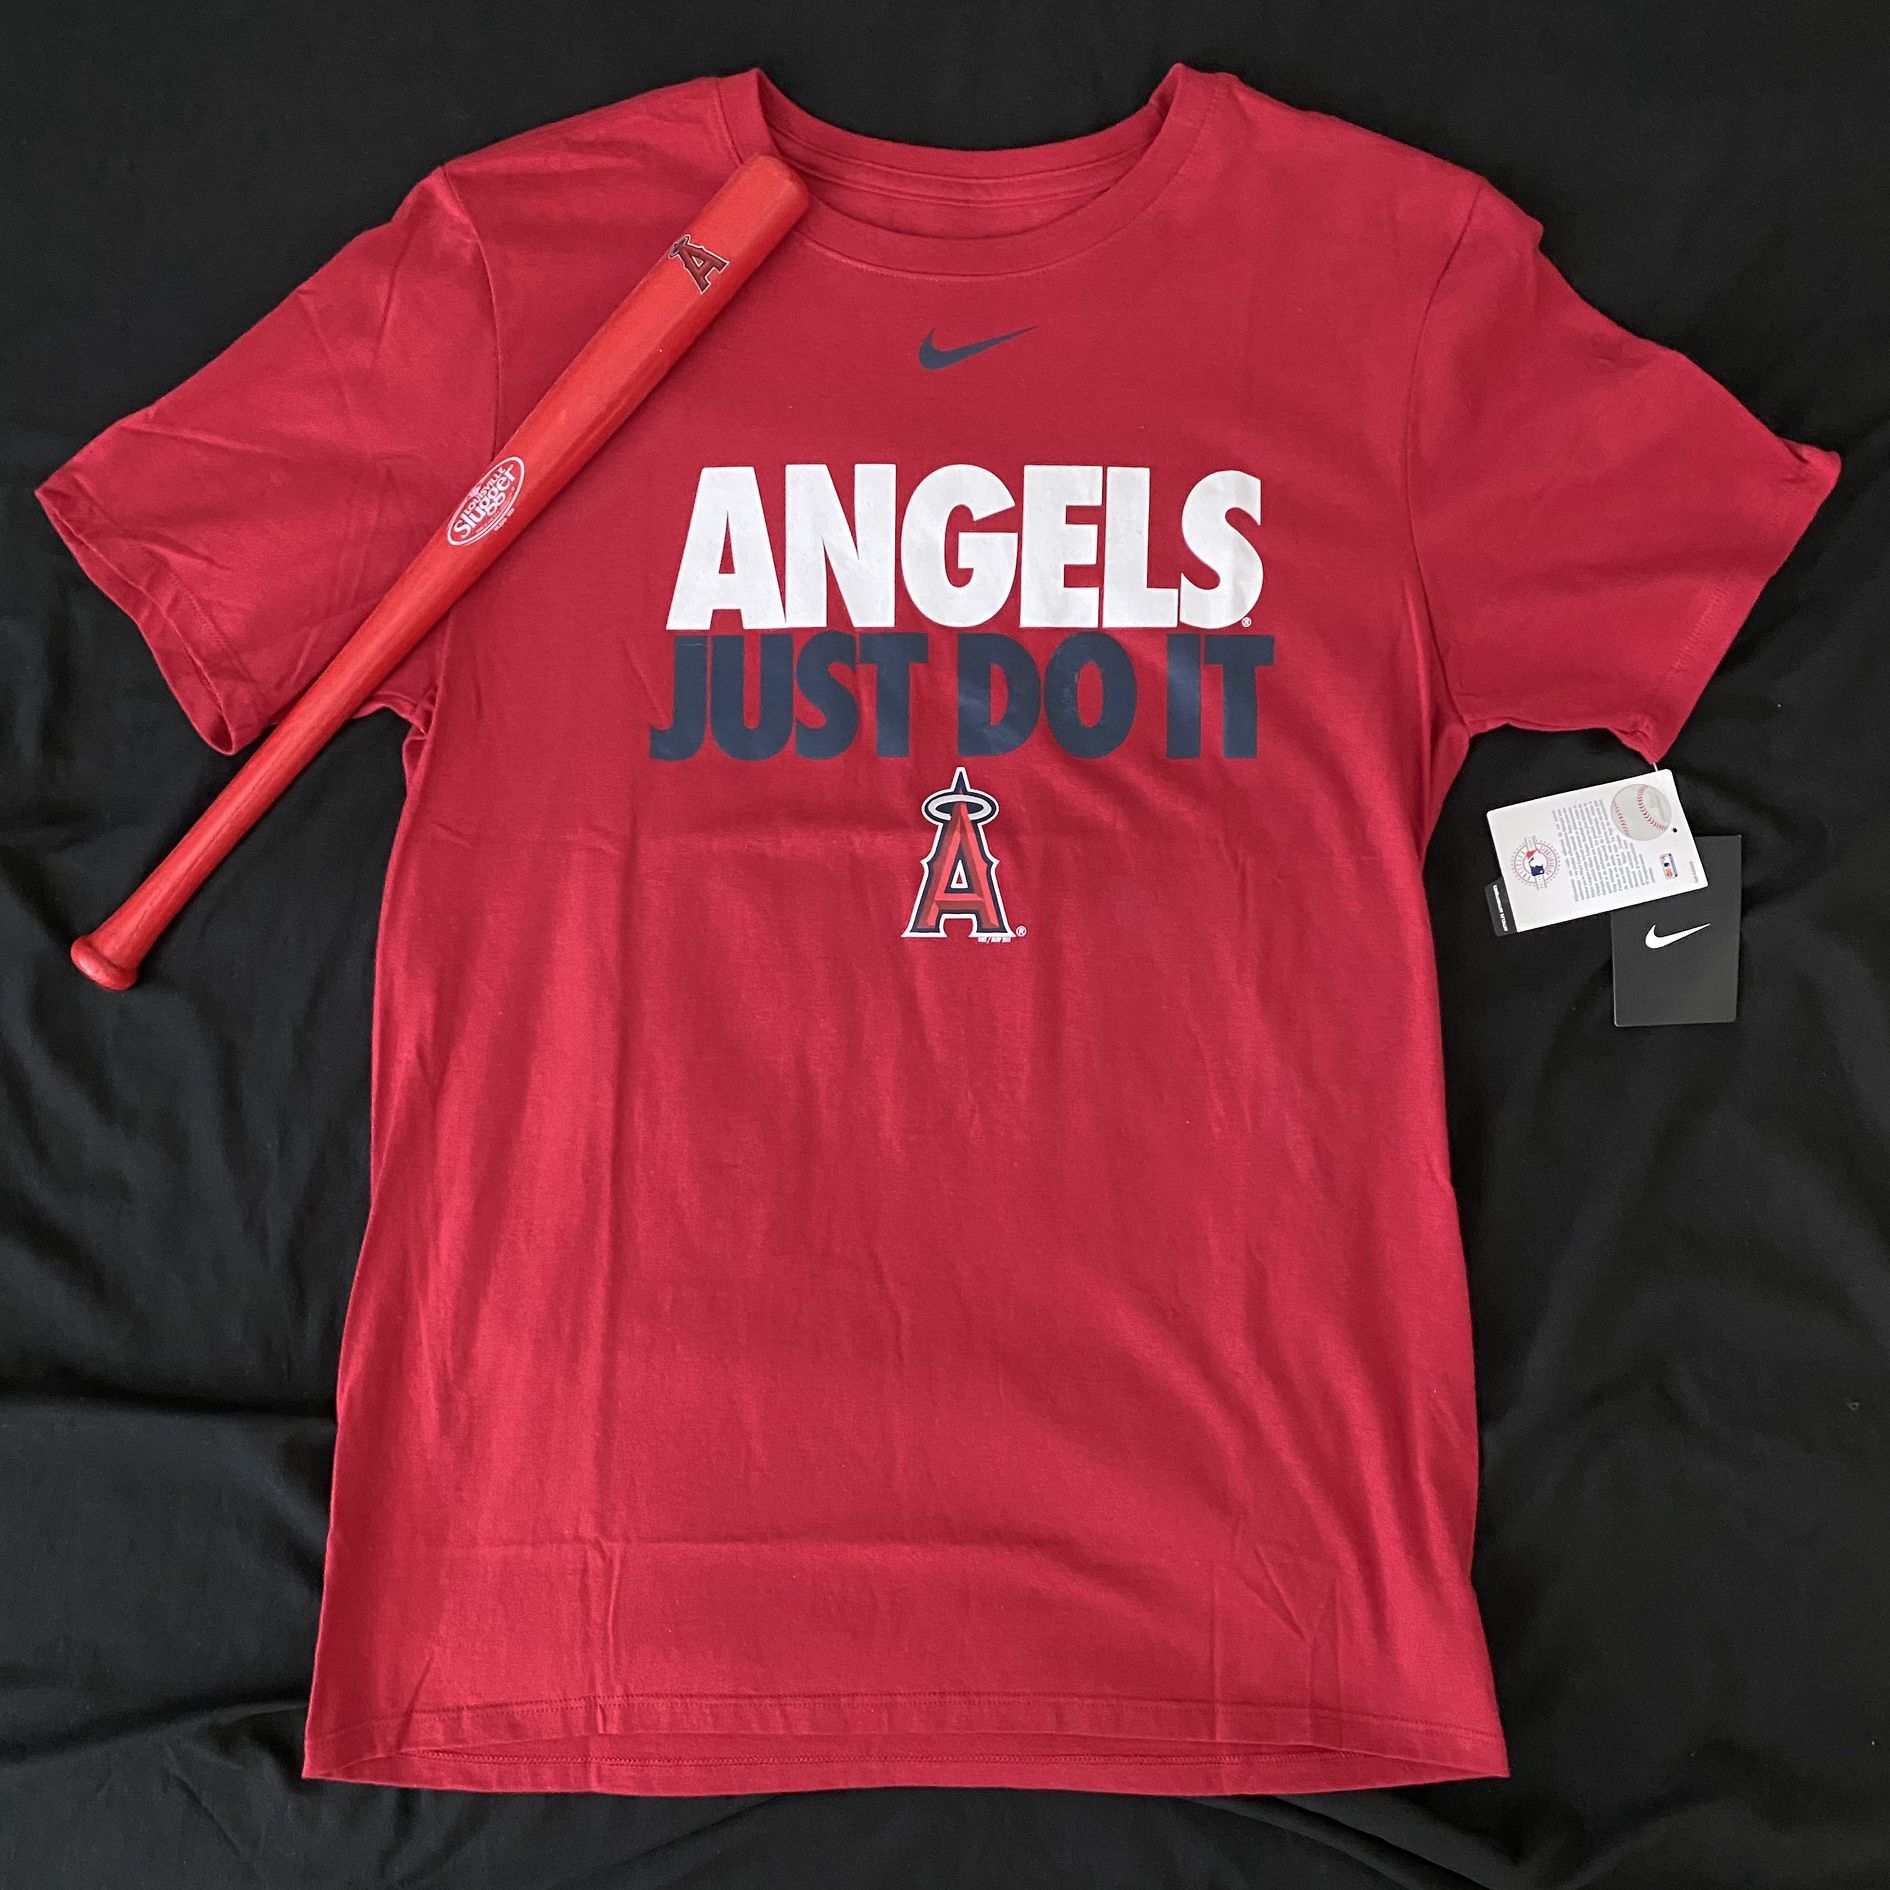 Nike “Just Do It” Angels M T-shirt and Small Baseball Bat